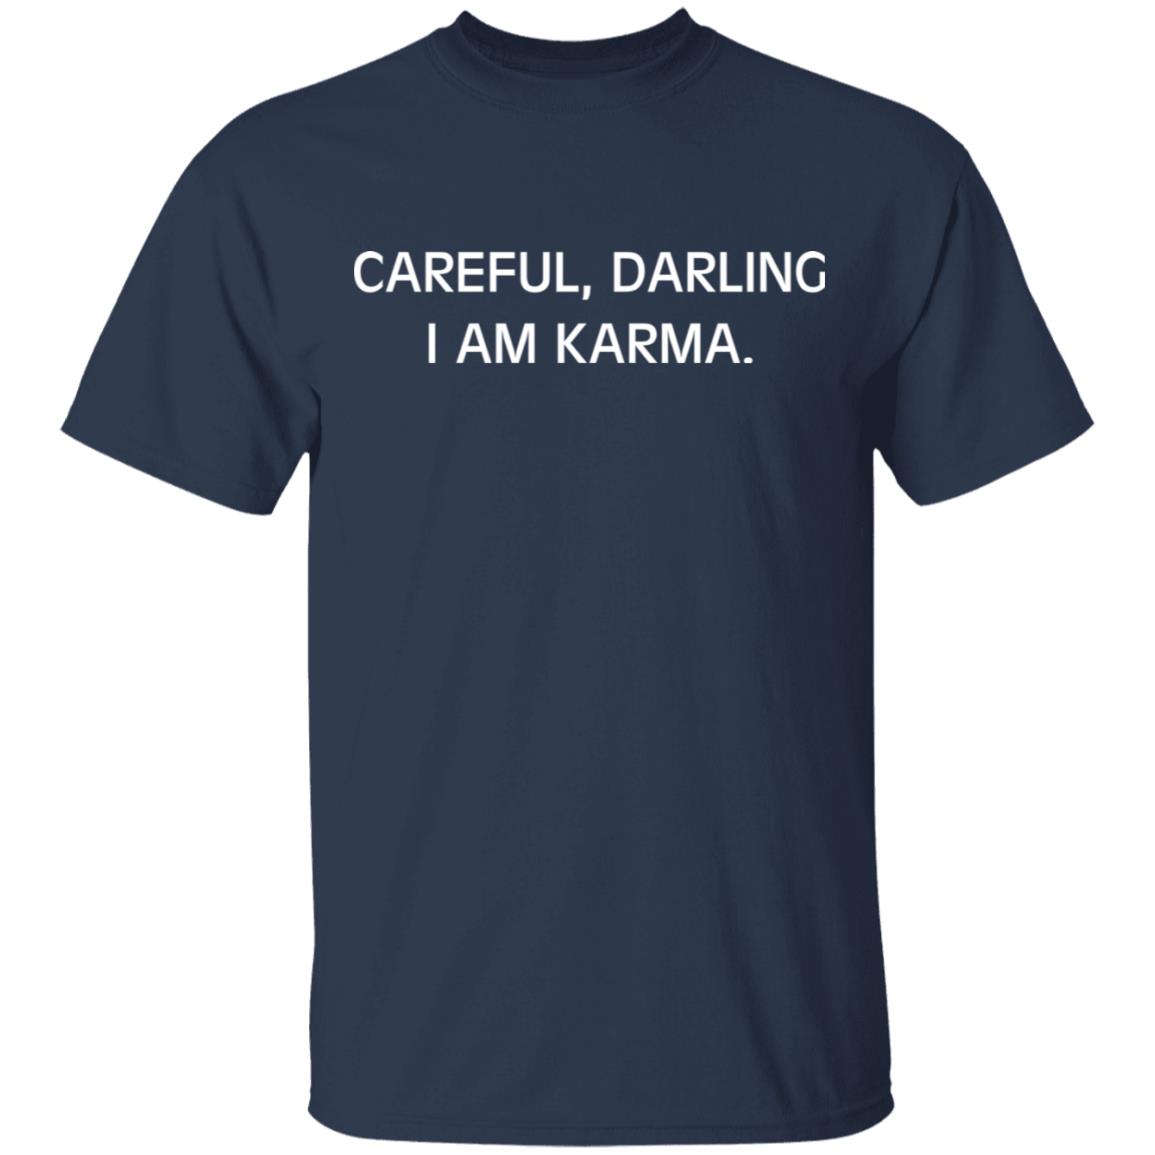 Careful darling I am karma shirt - Rockatee